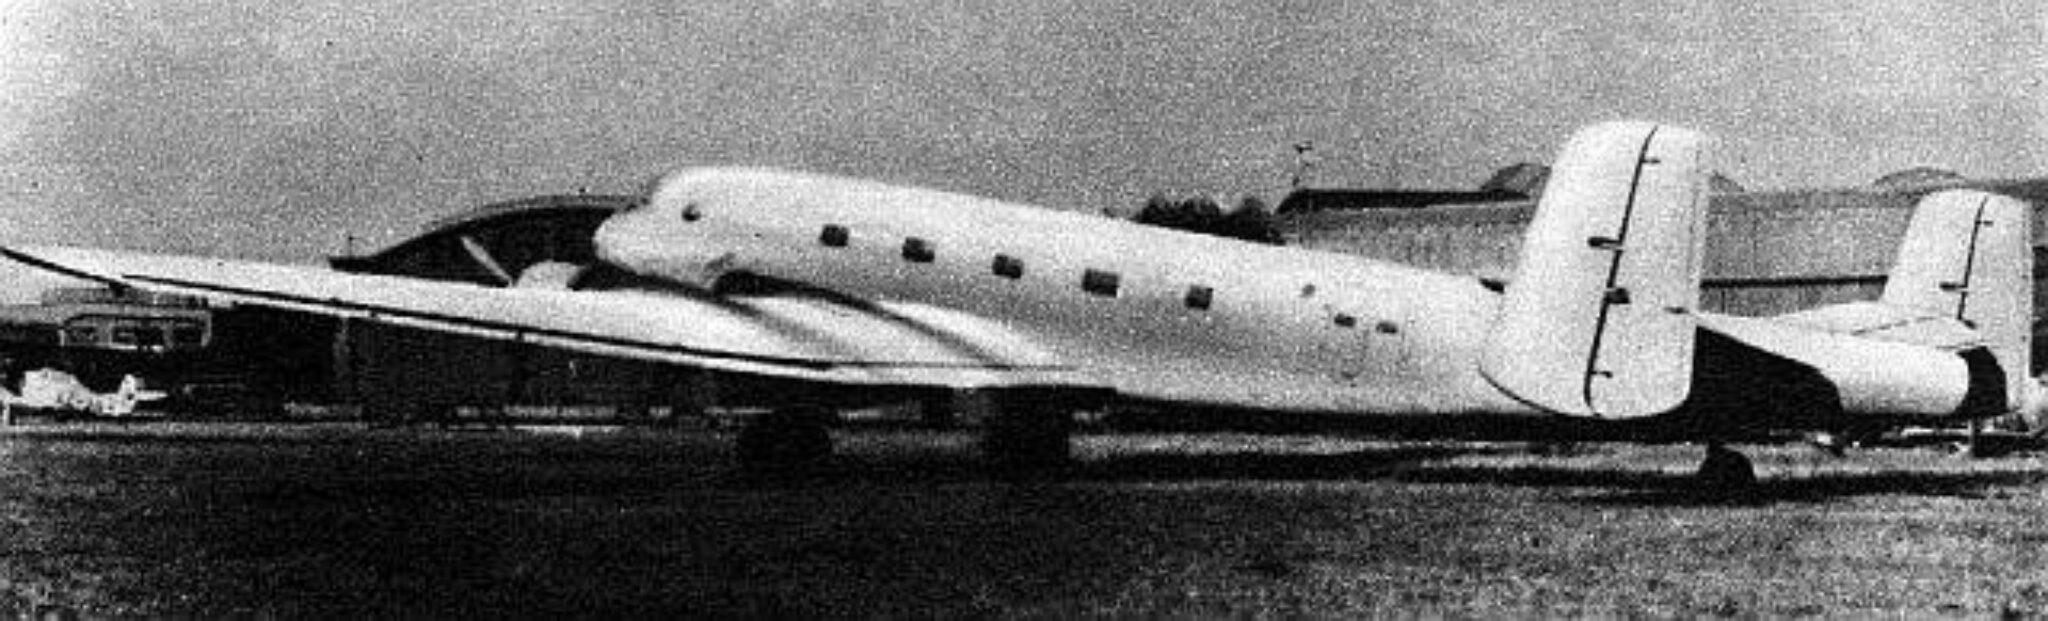 ТШ-3 самолет.